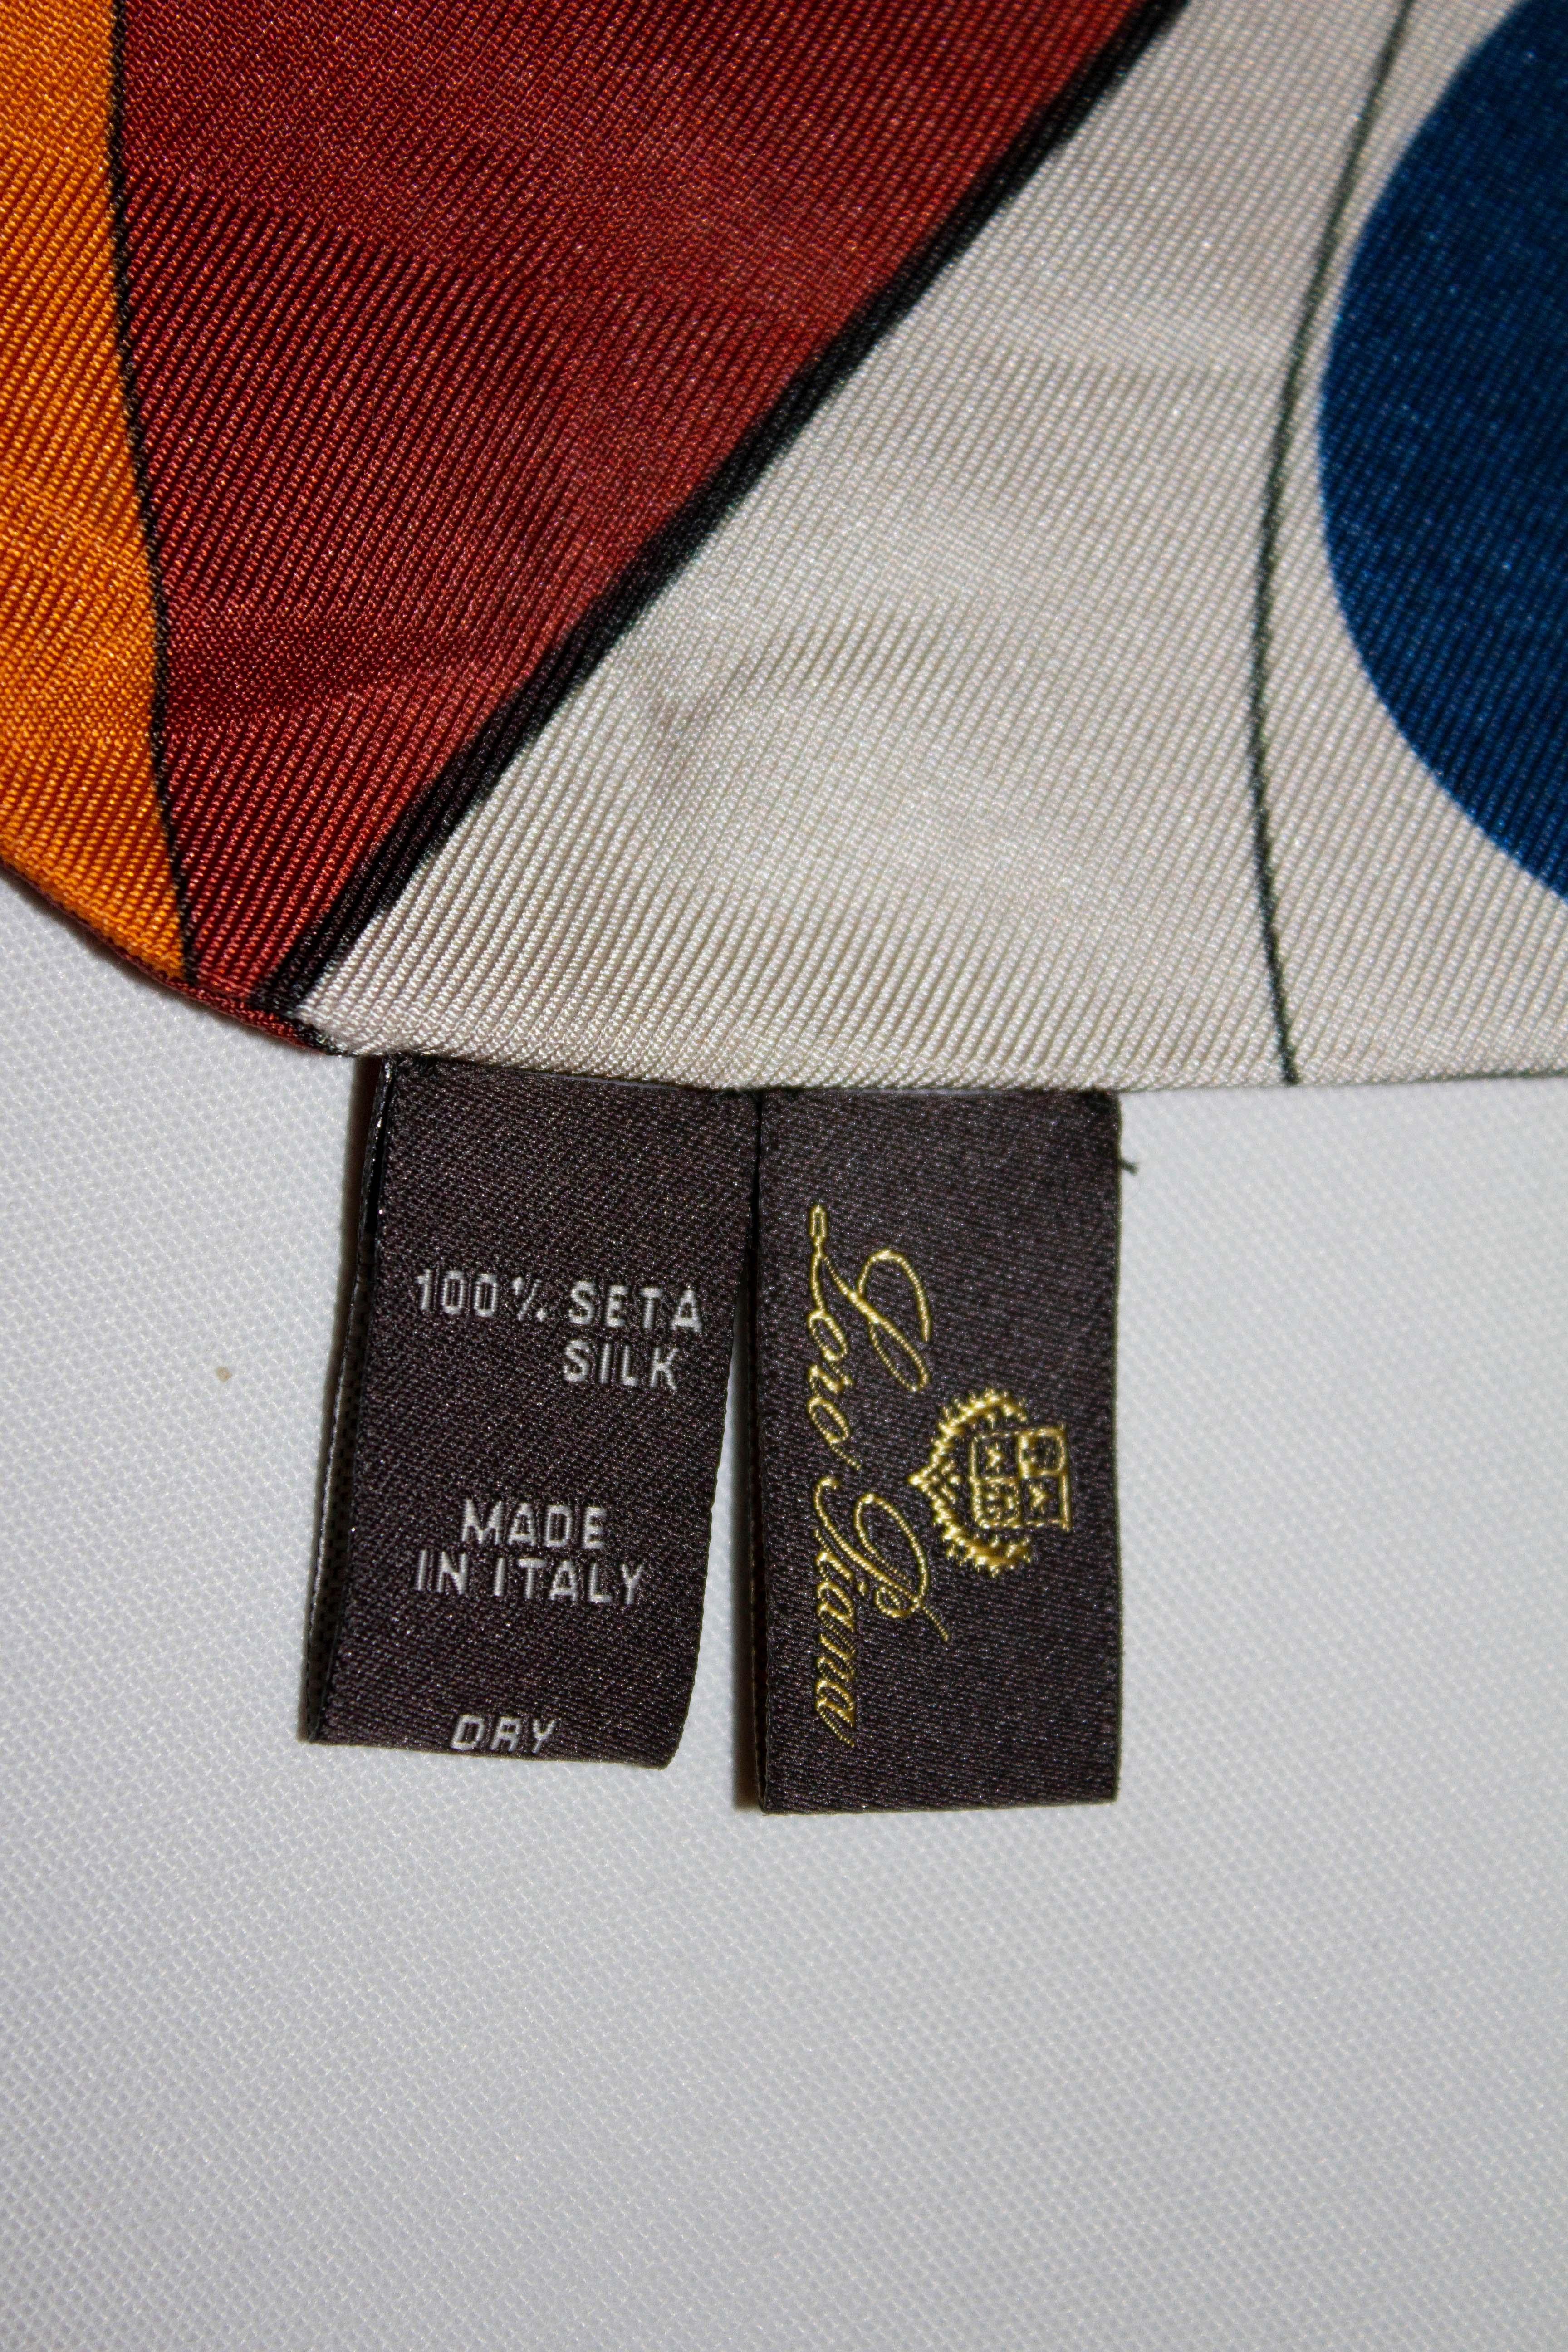 Women's or Men's Loro Piana Silk Scarf in Orange, Blue , Brown , White and Grey For Sale